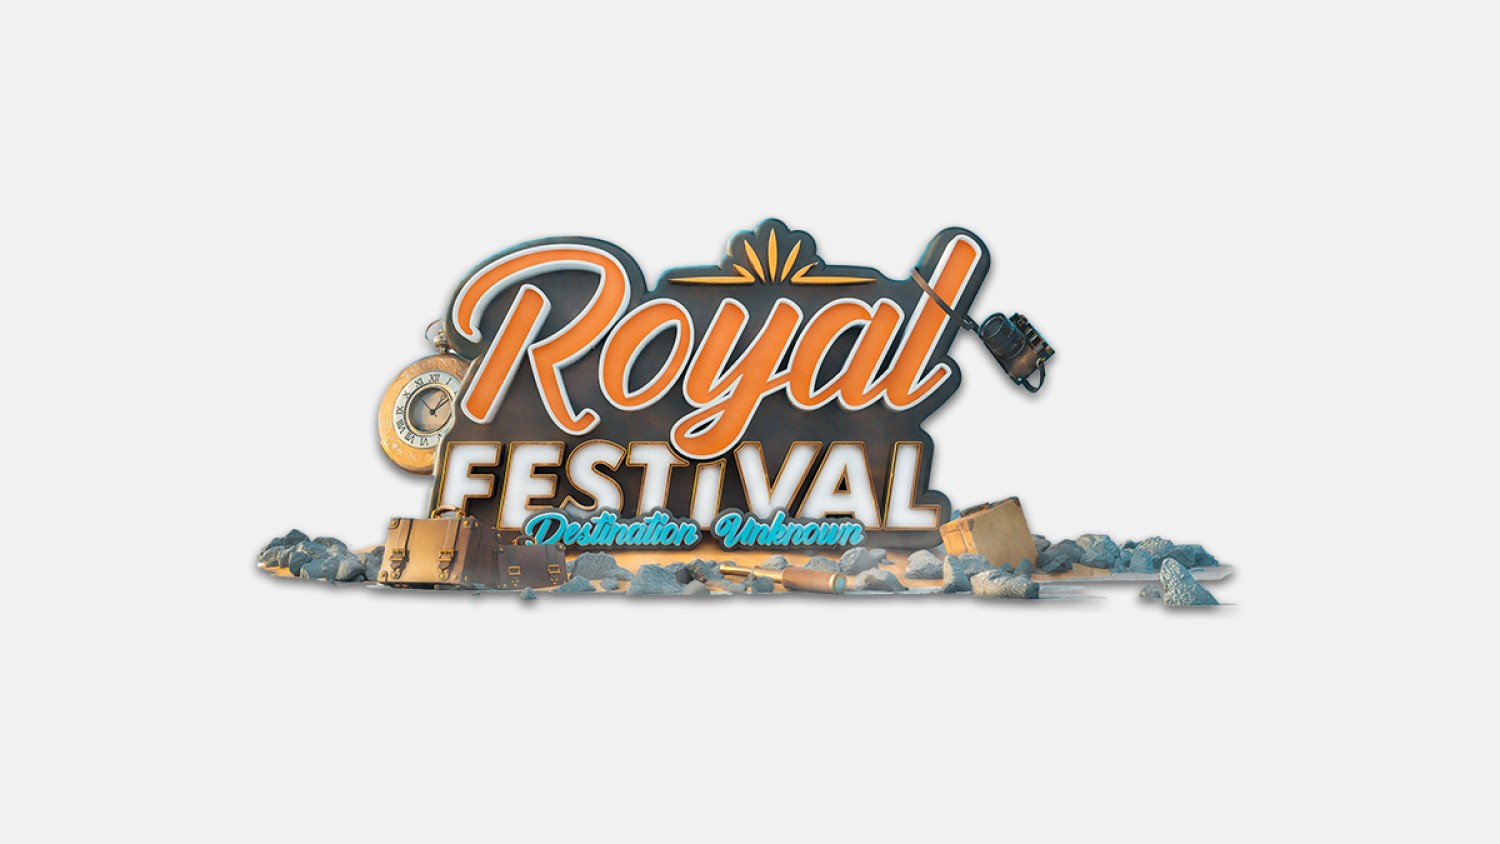 Royal Festival